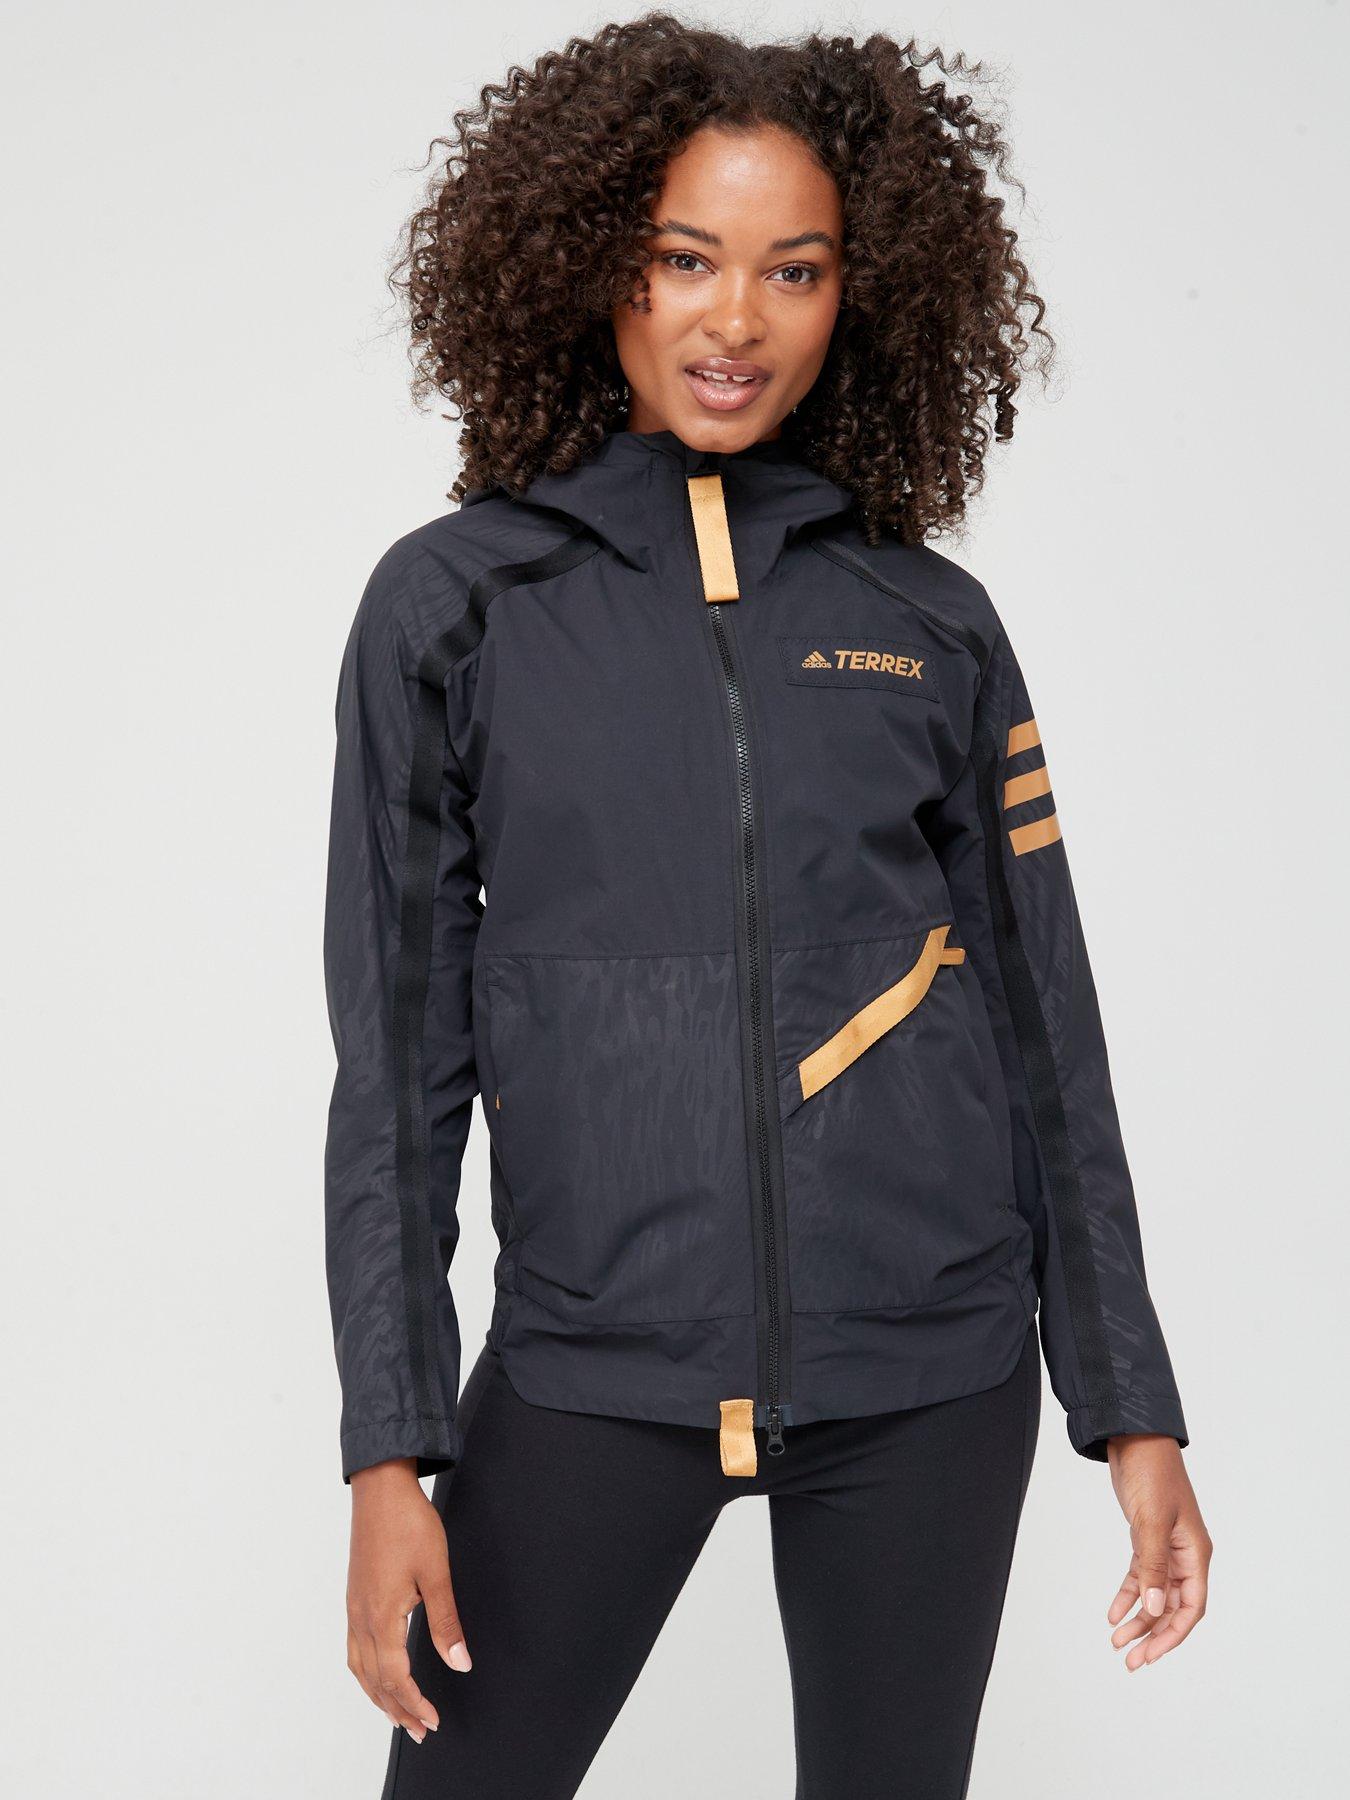 Details about   US Womens Hooded Waterproof Raincoat Wind Jacket Ladies Outdoor Rain Forest Coat 